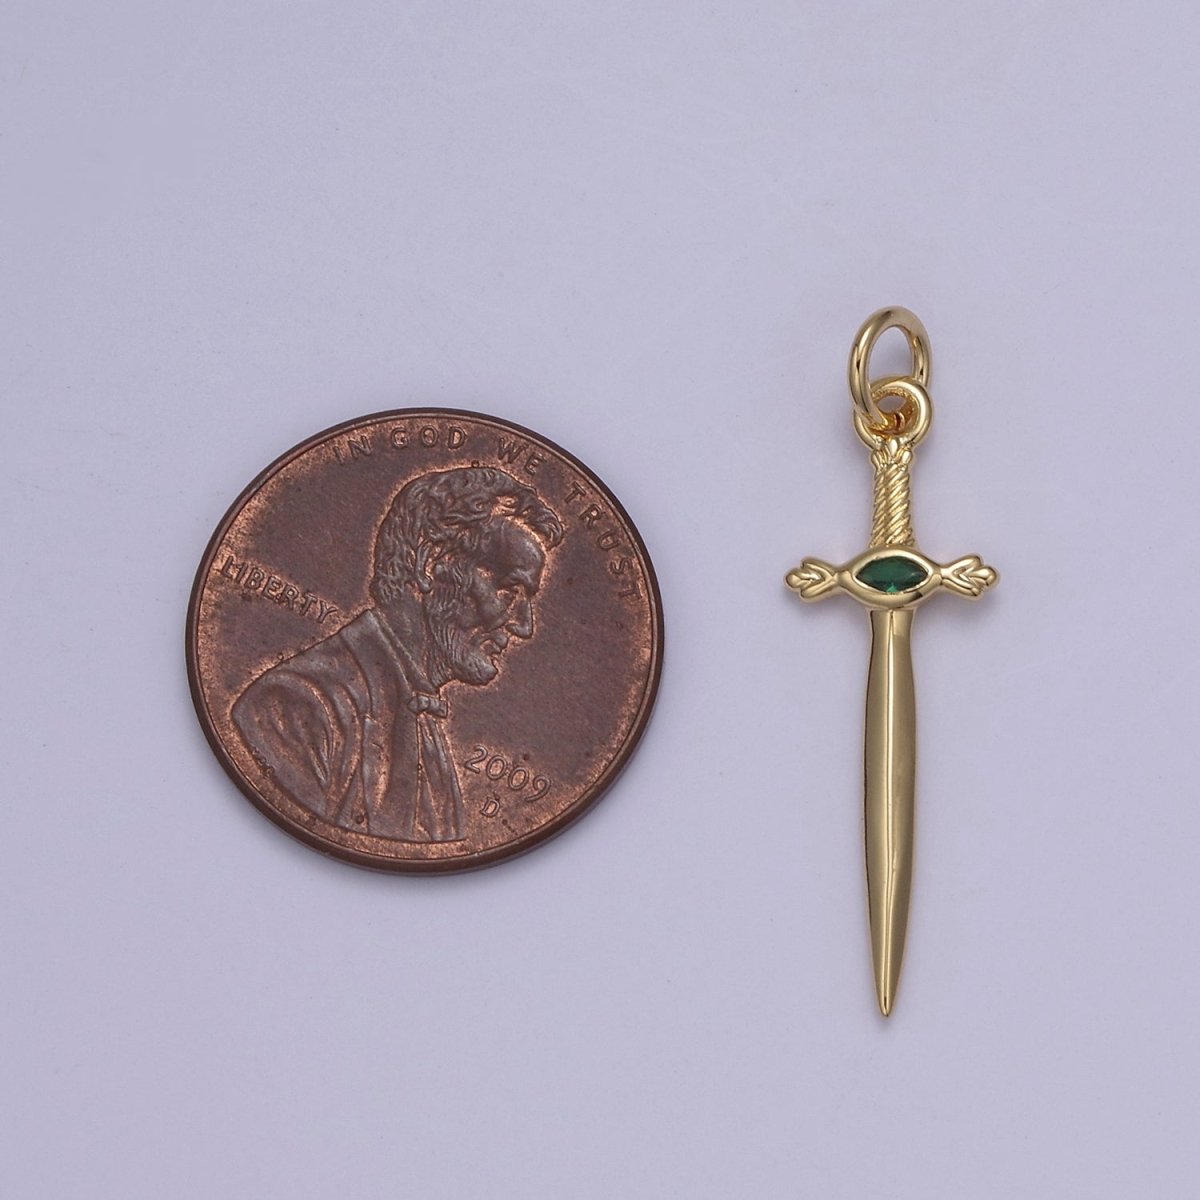 Dainty Dagger Pendant, CZ Sword Knife pendant for Bracelet Earring Necklace 24k Gold Filled Jewelry N-811 - N-814 - DLUXCA